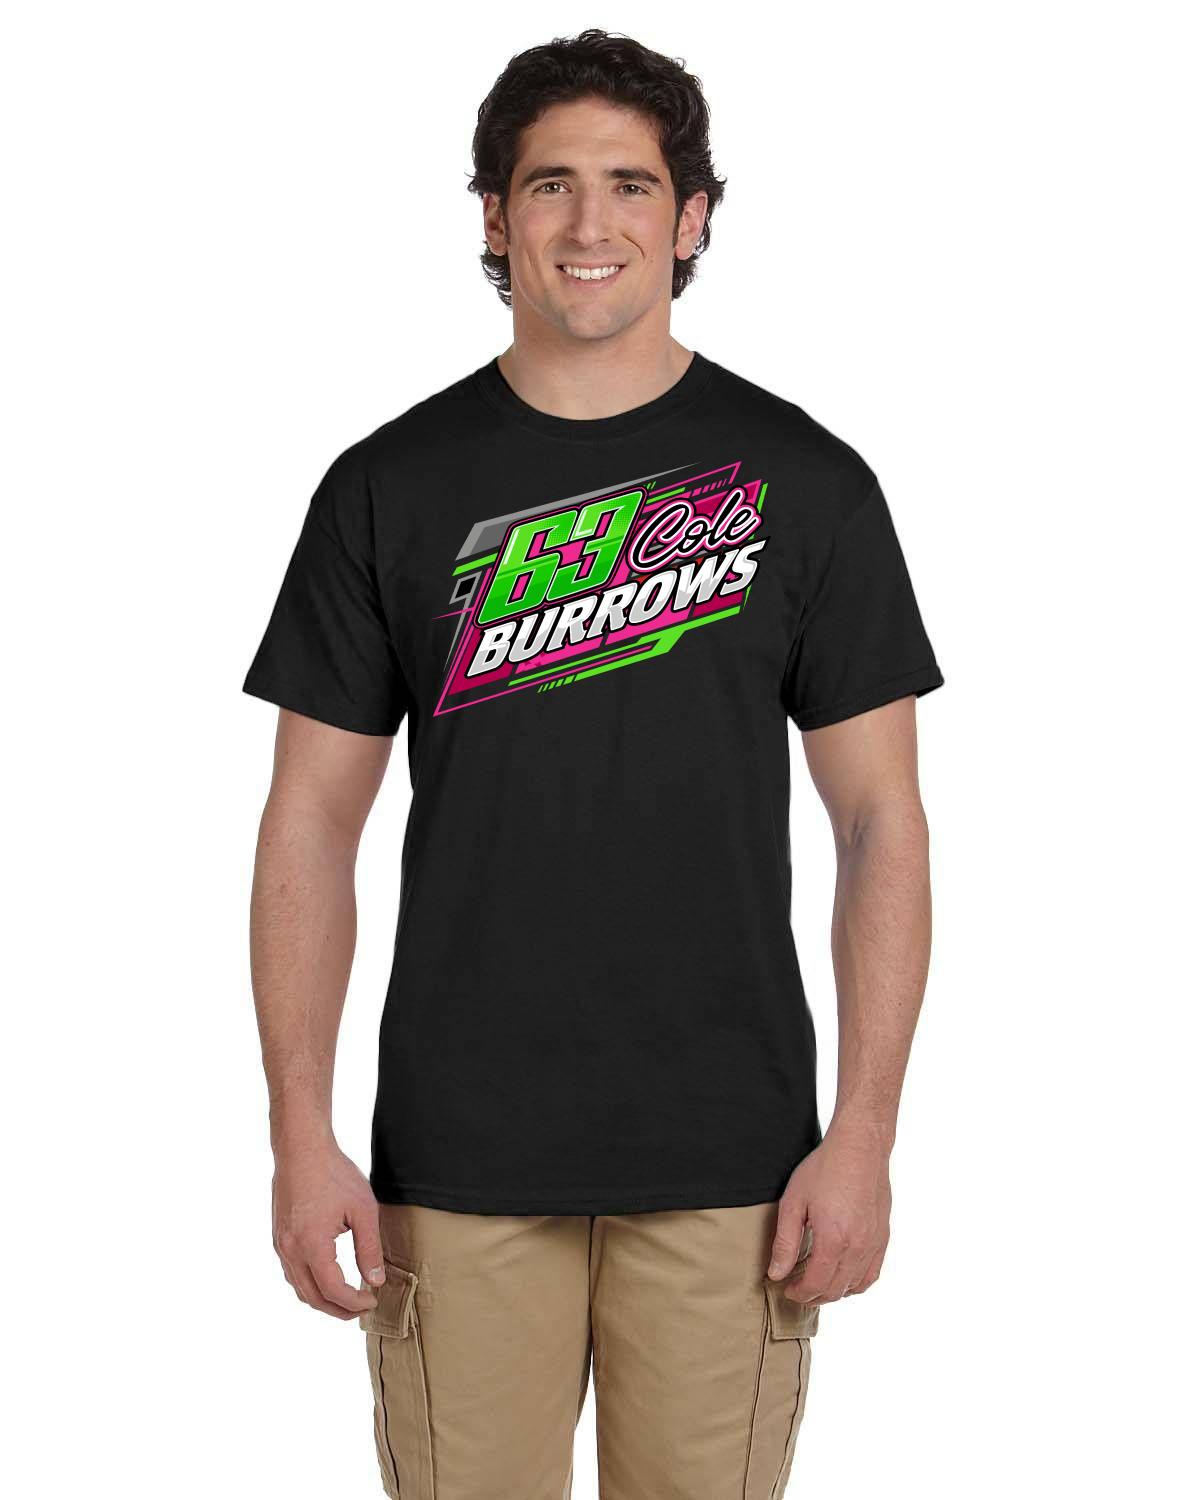 Cole Burrows Racing adult T-Shirt